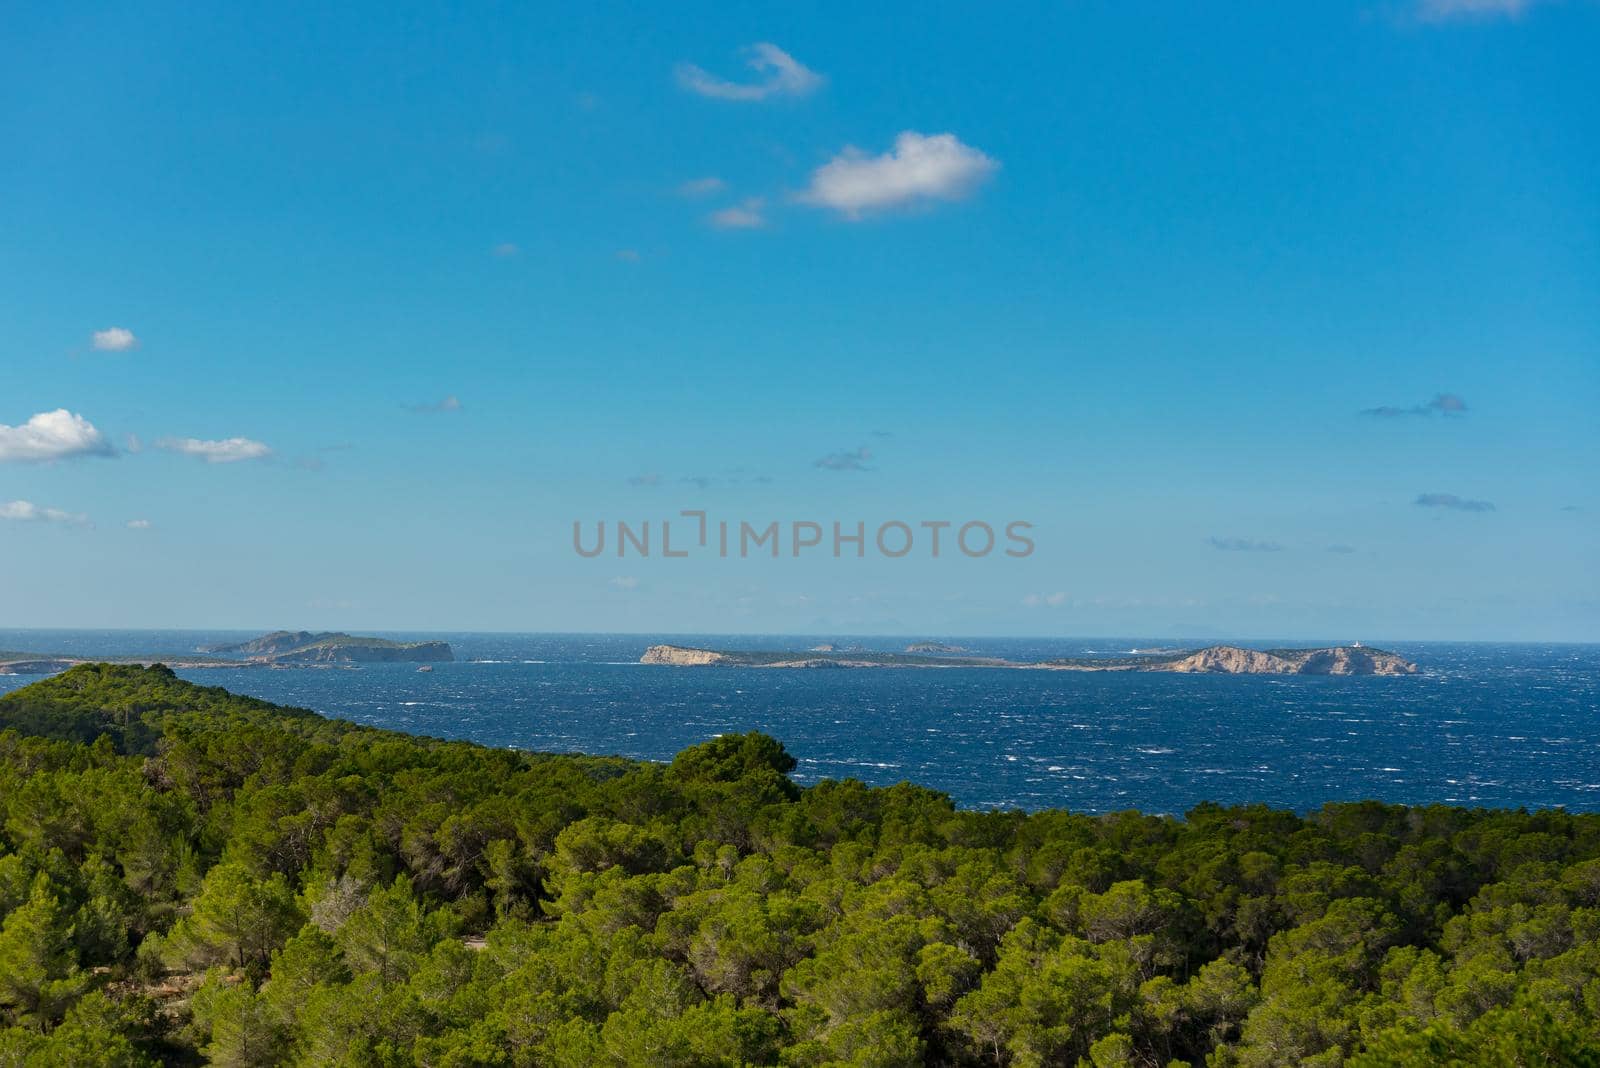 Panoramic view of the city of Sant Antoni de Portmany in Ibiza, Spain